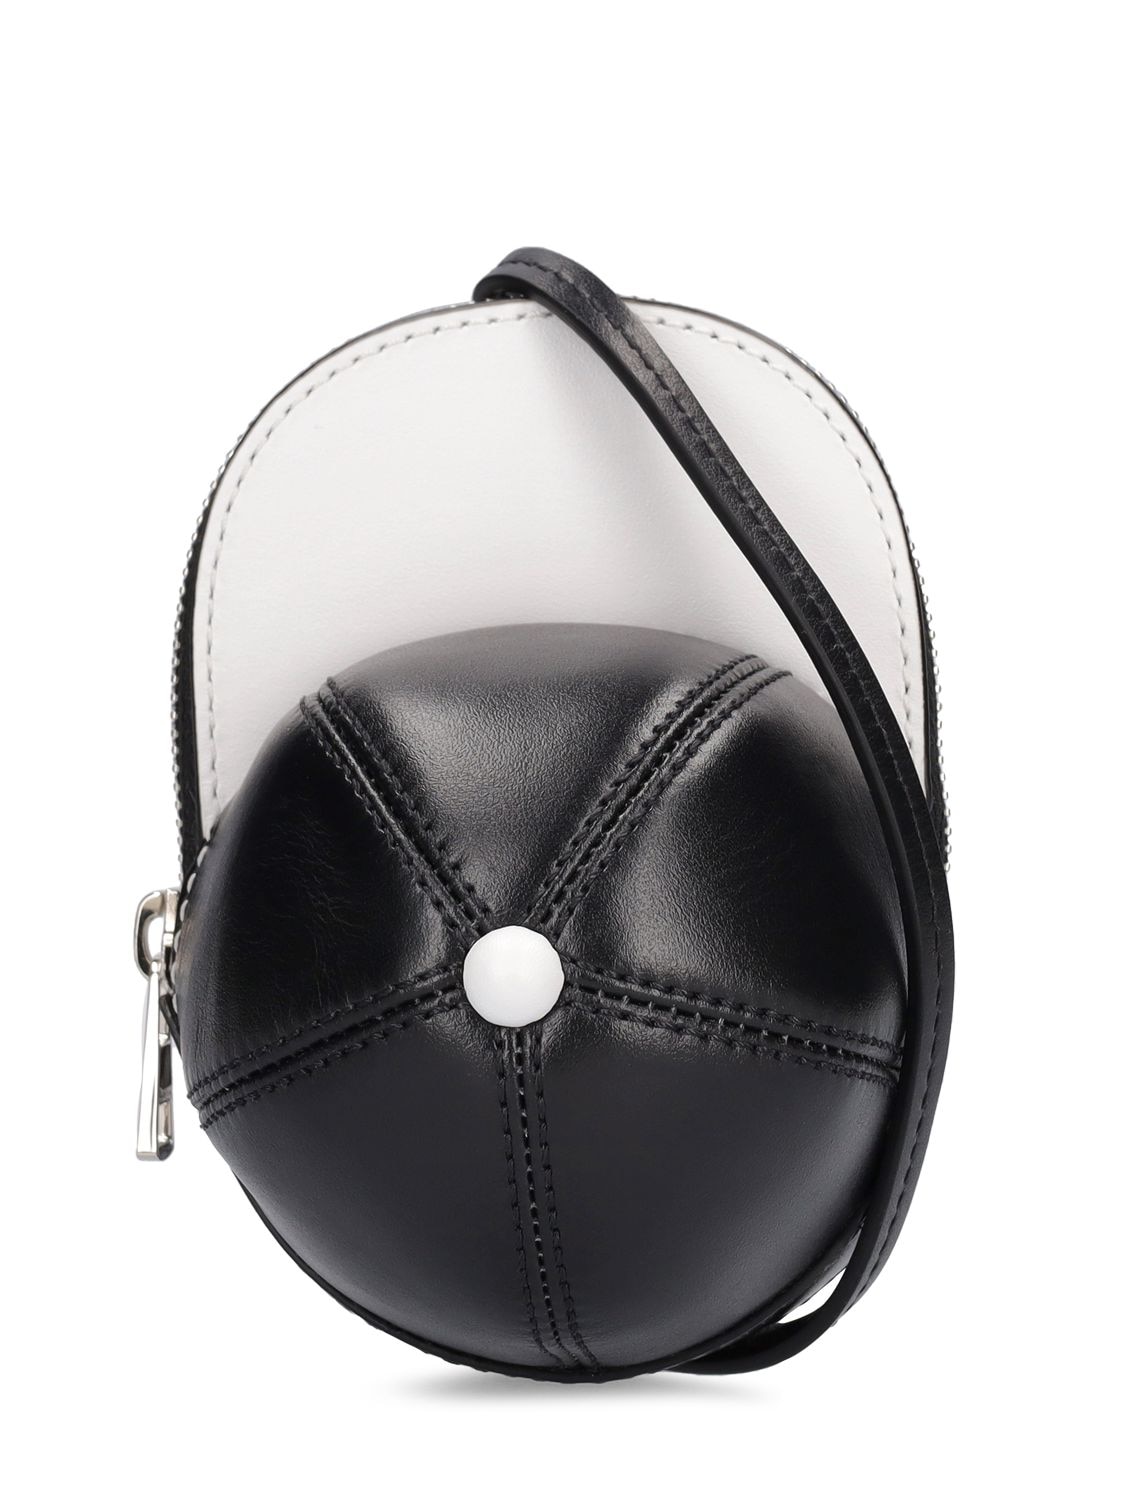 Image of Small Leather Baseball Cap Bag